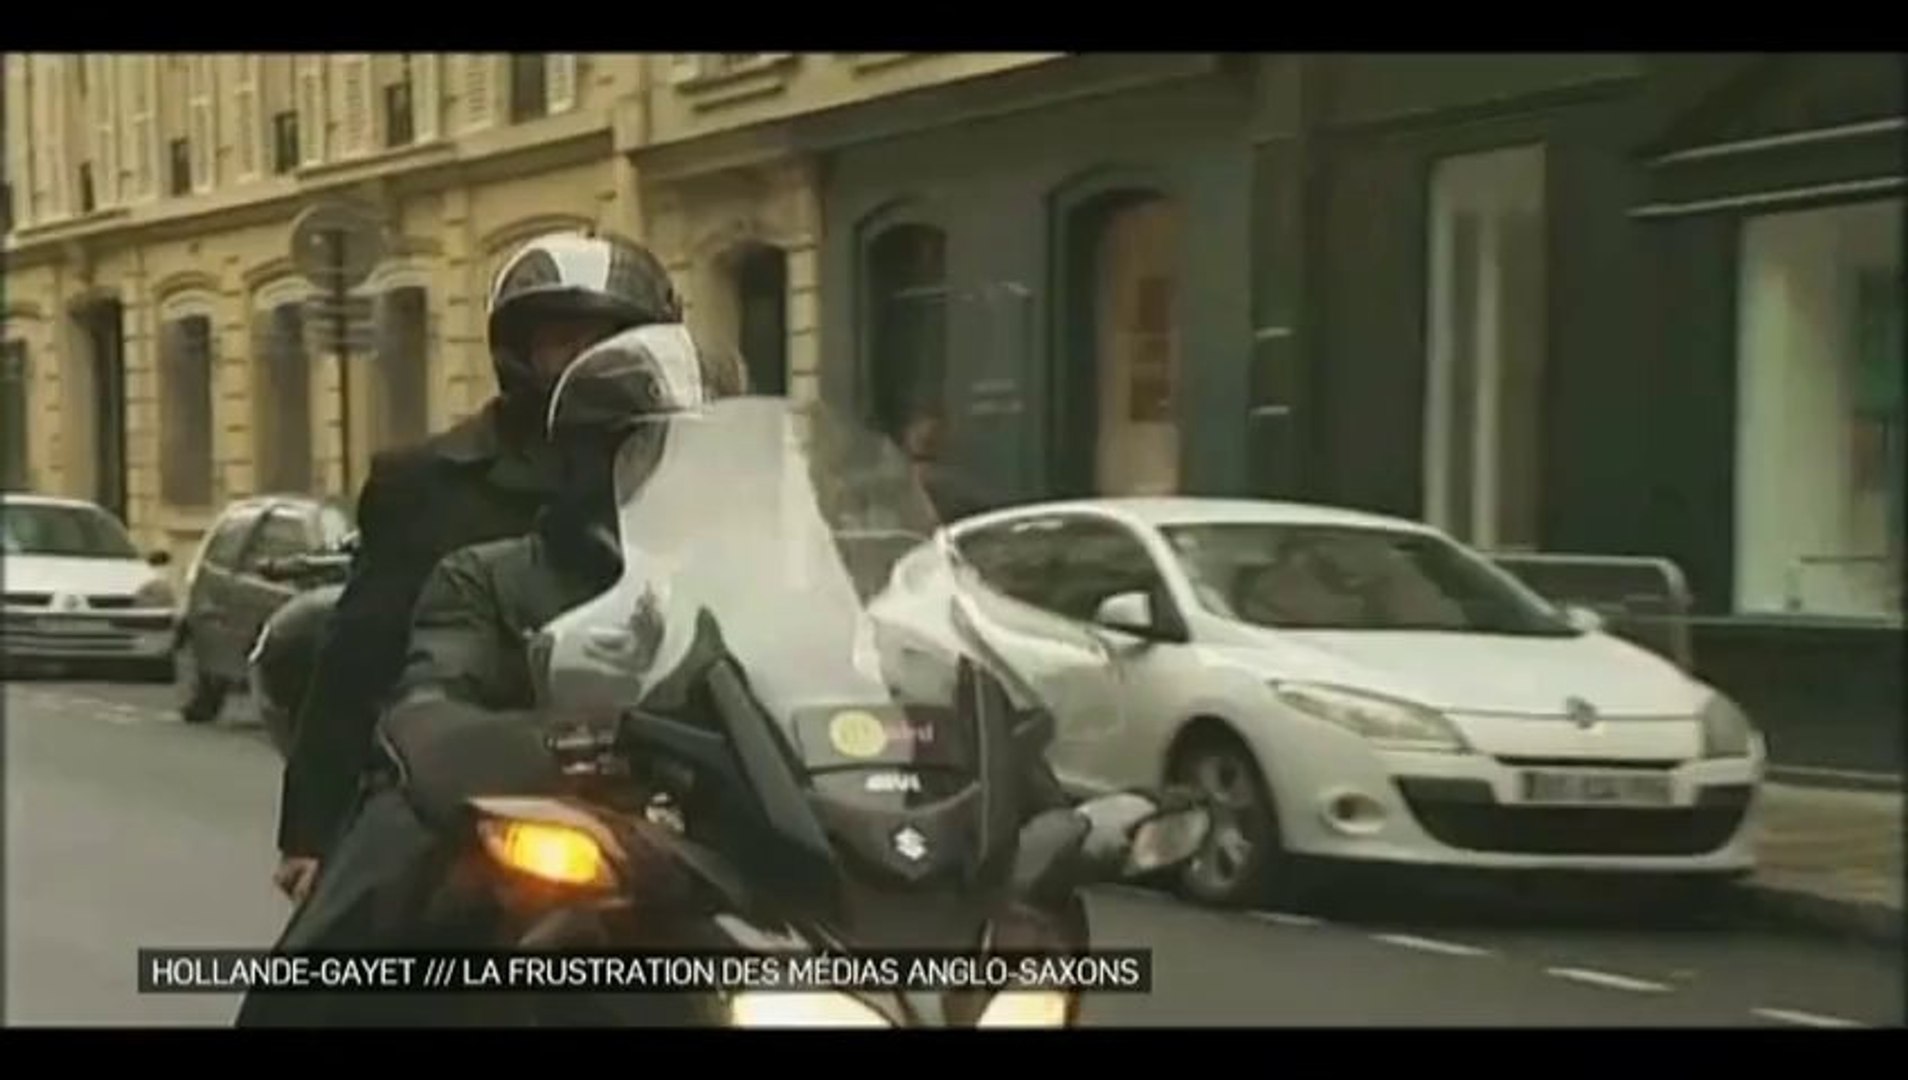 Gayet/Hollande : La reconstitution du trajet en scooter - Vidéo Dailymotion